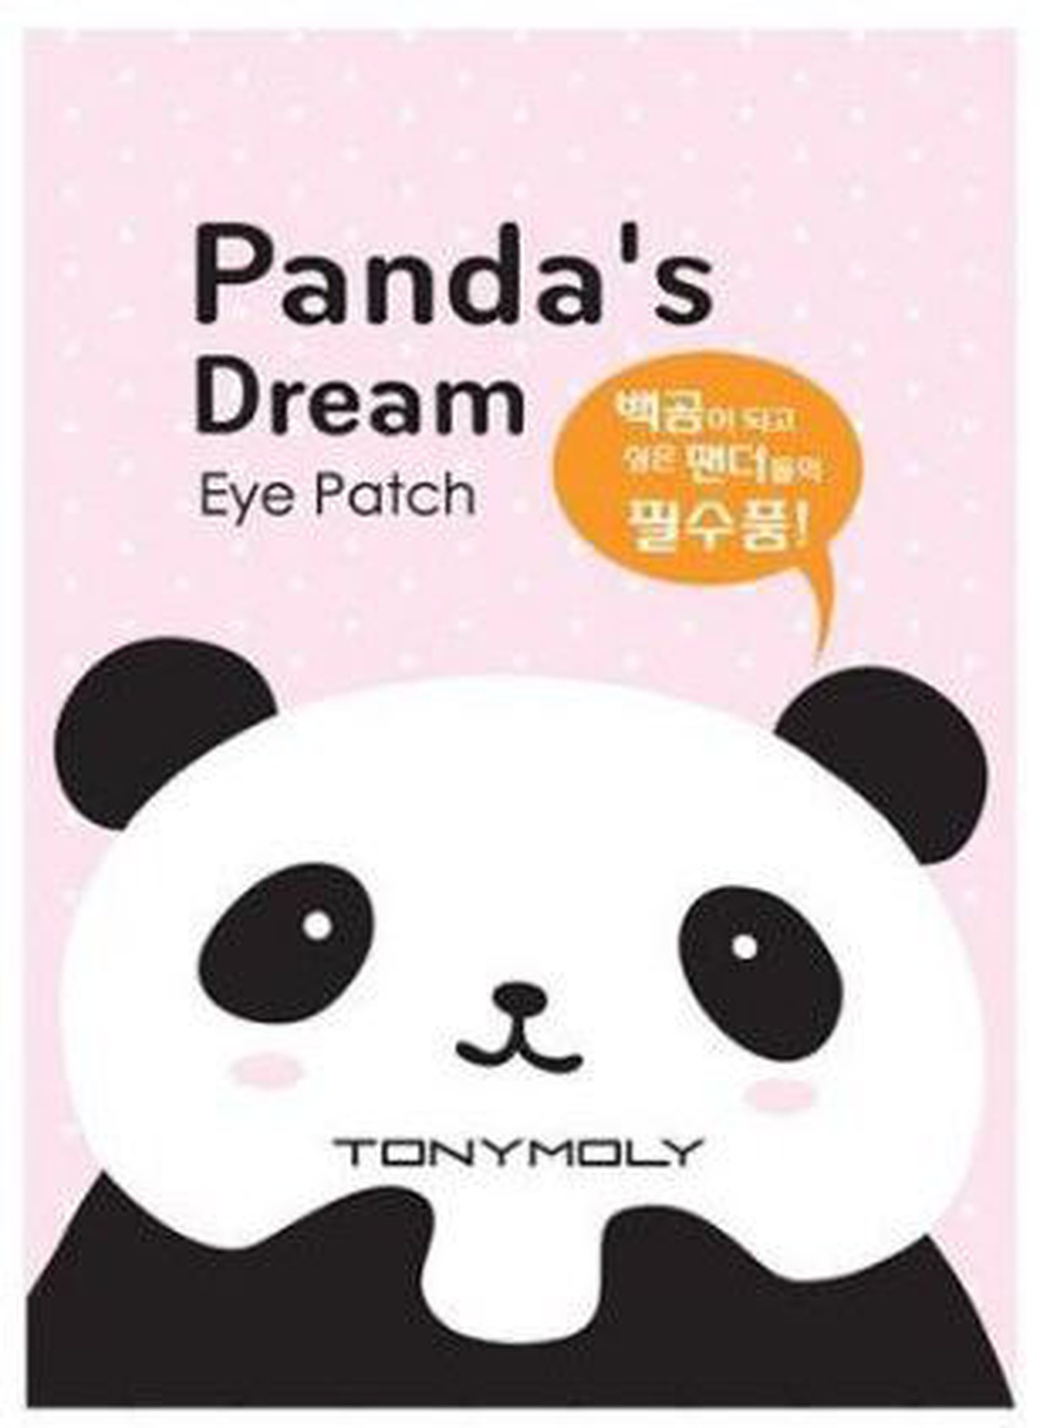 Tony Moly Panda's Dream Eye Patch Патч для области вокруг глаз фото